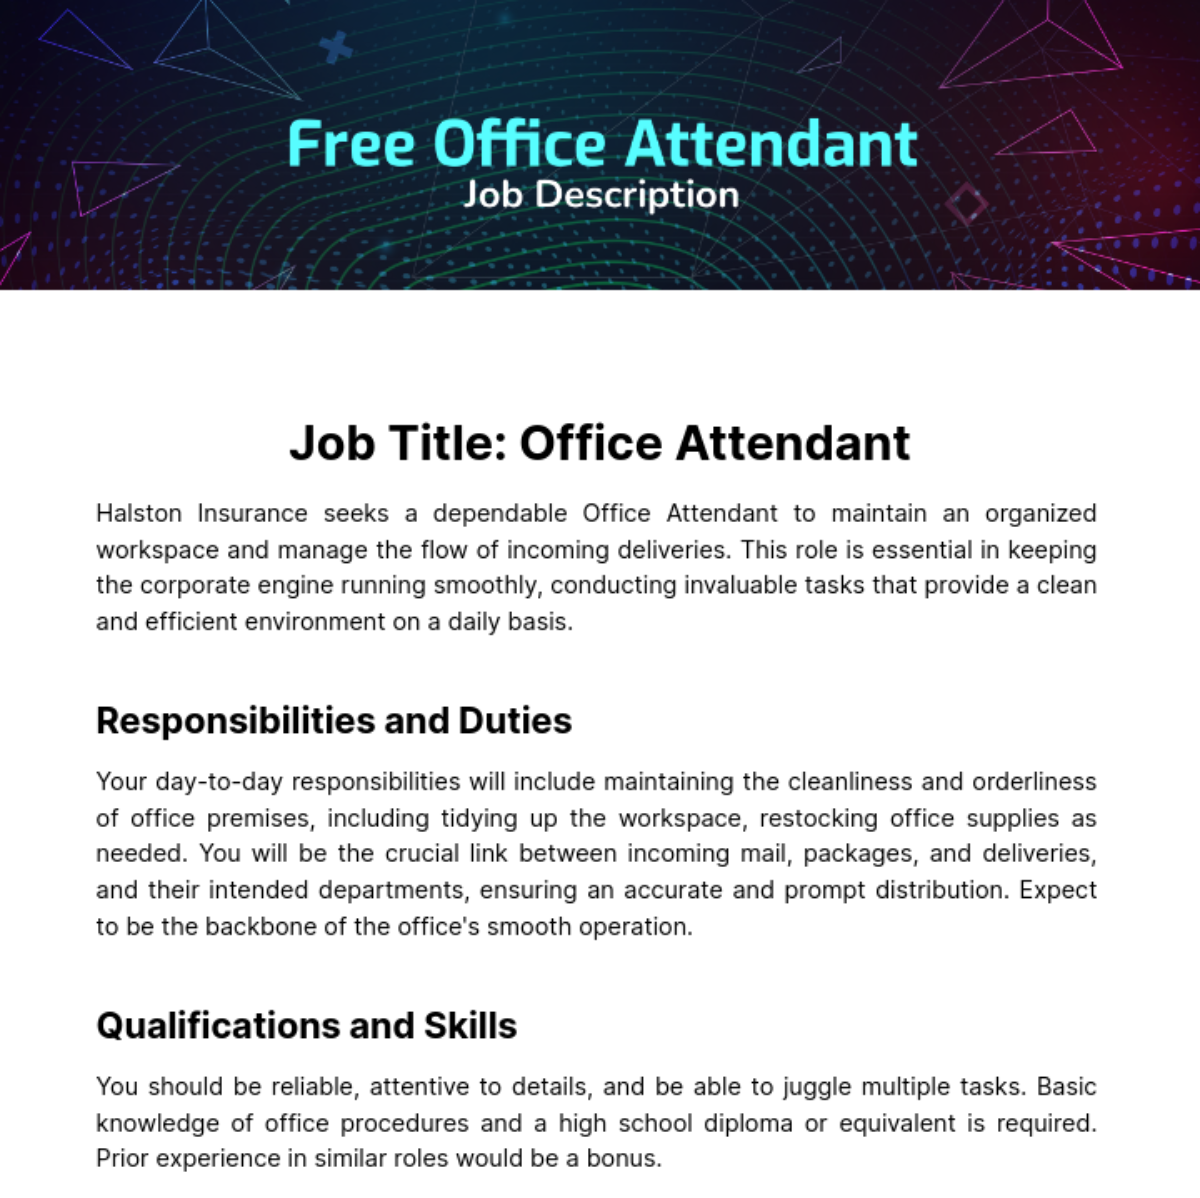 Free Office Attendant Job Description Template